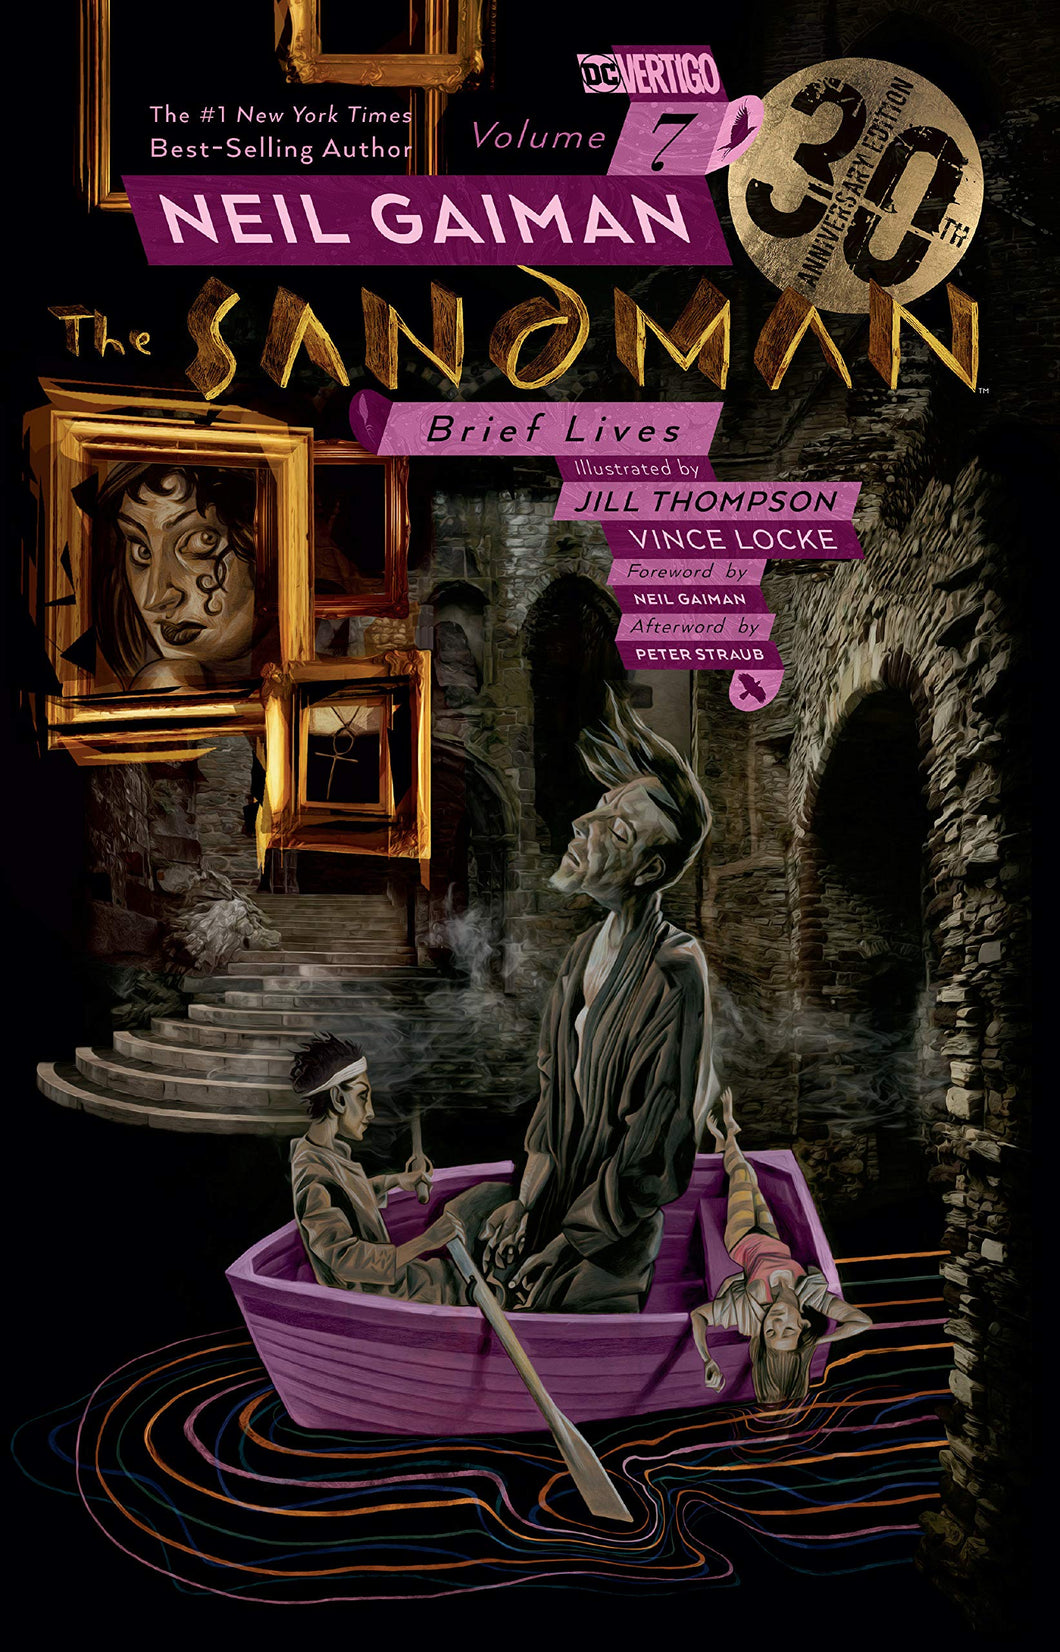 The Sandman Volume 7 Brief Lives 30th Anniversary Edition